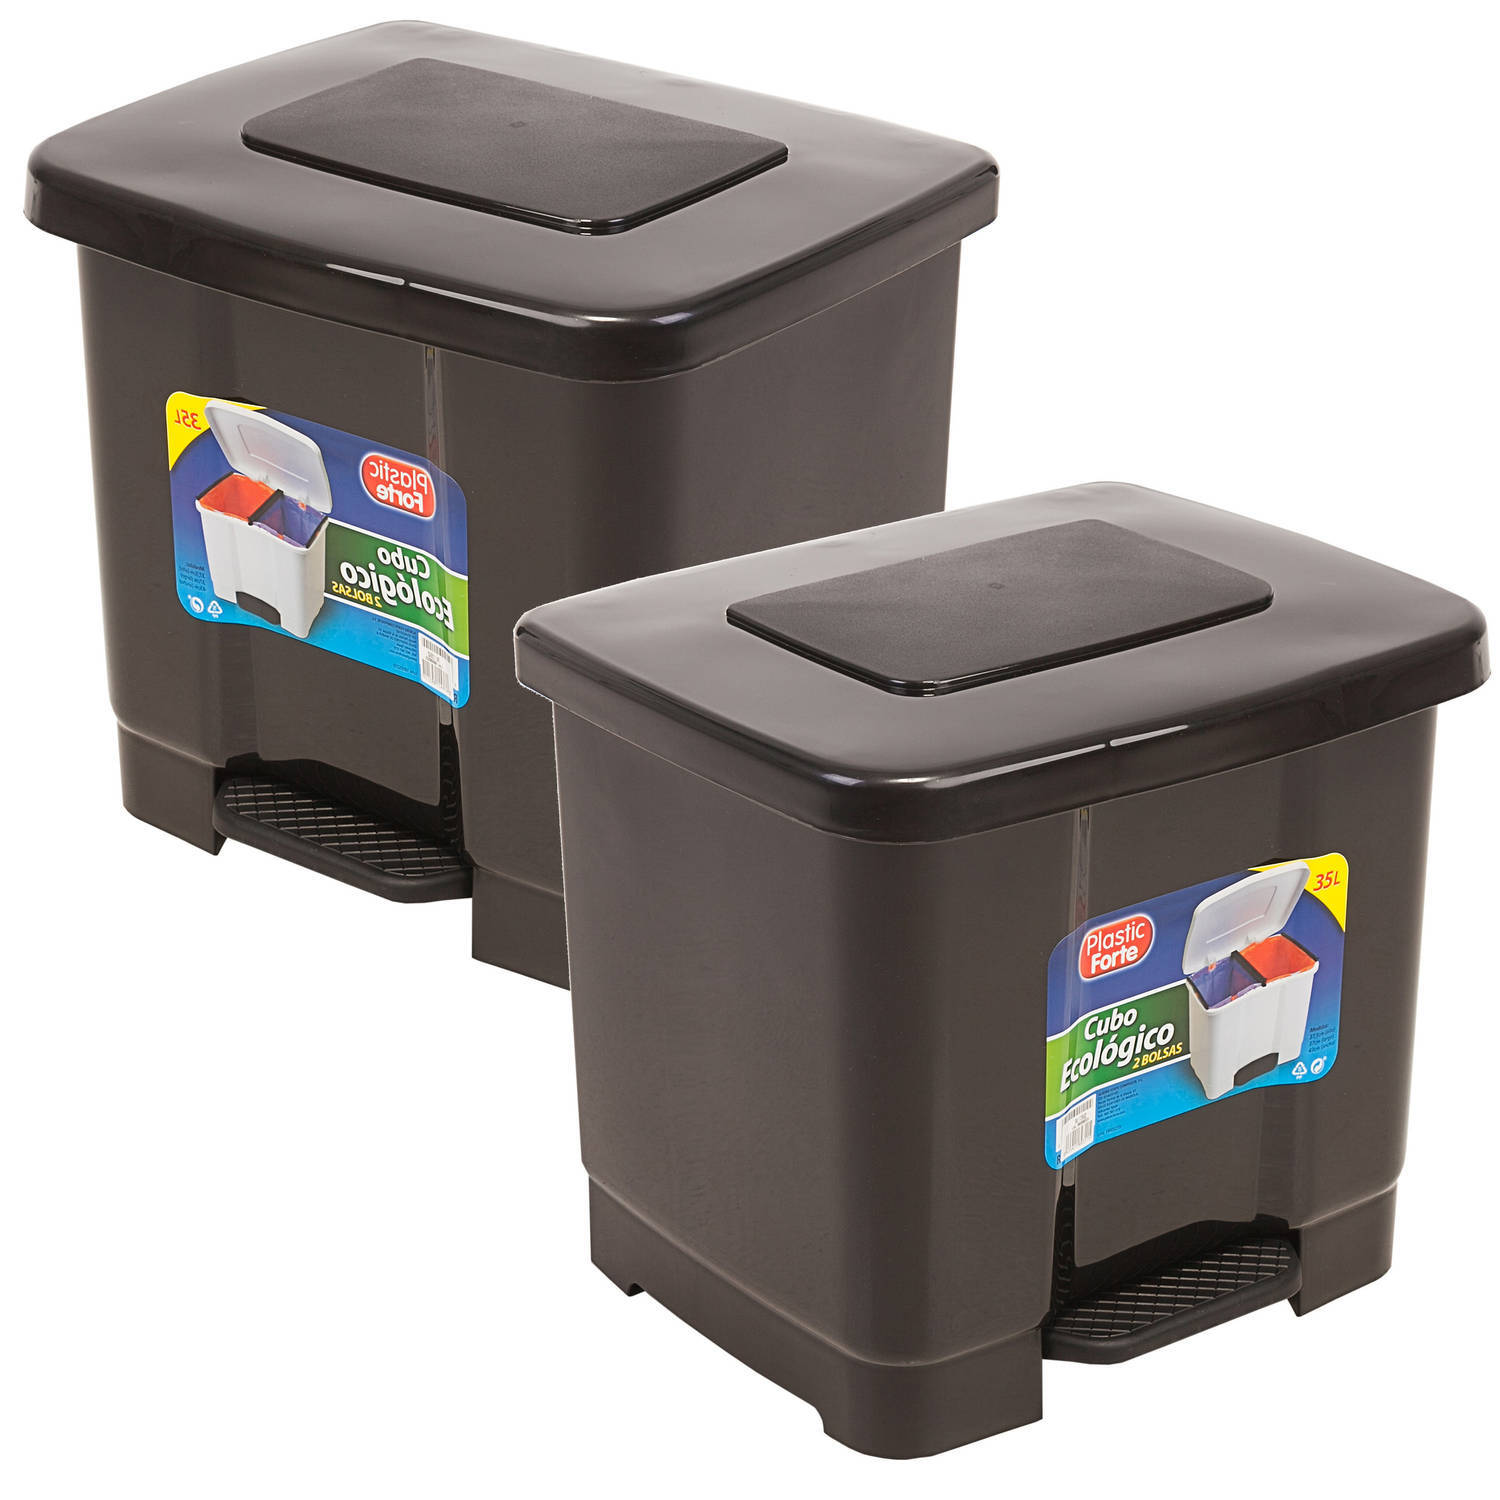 Forte Plastics 2x stuks dubbele afvalemmer/vuilnisemmer 35 liter met deksel en pedaal - Donkergrijs- vuilnisbakken/prullenbakken - Kantoor/keuken